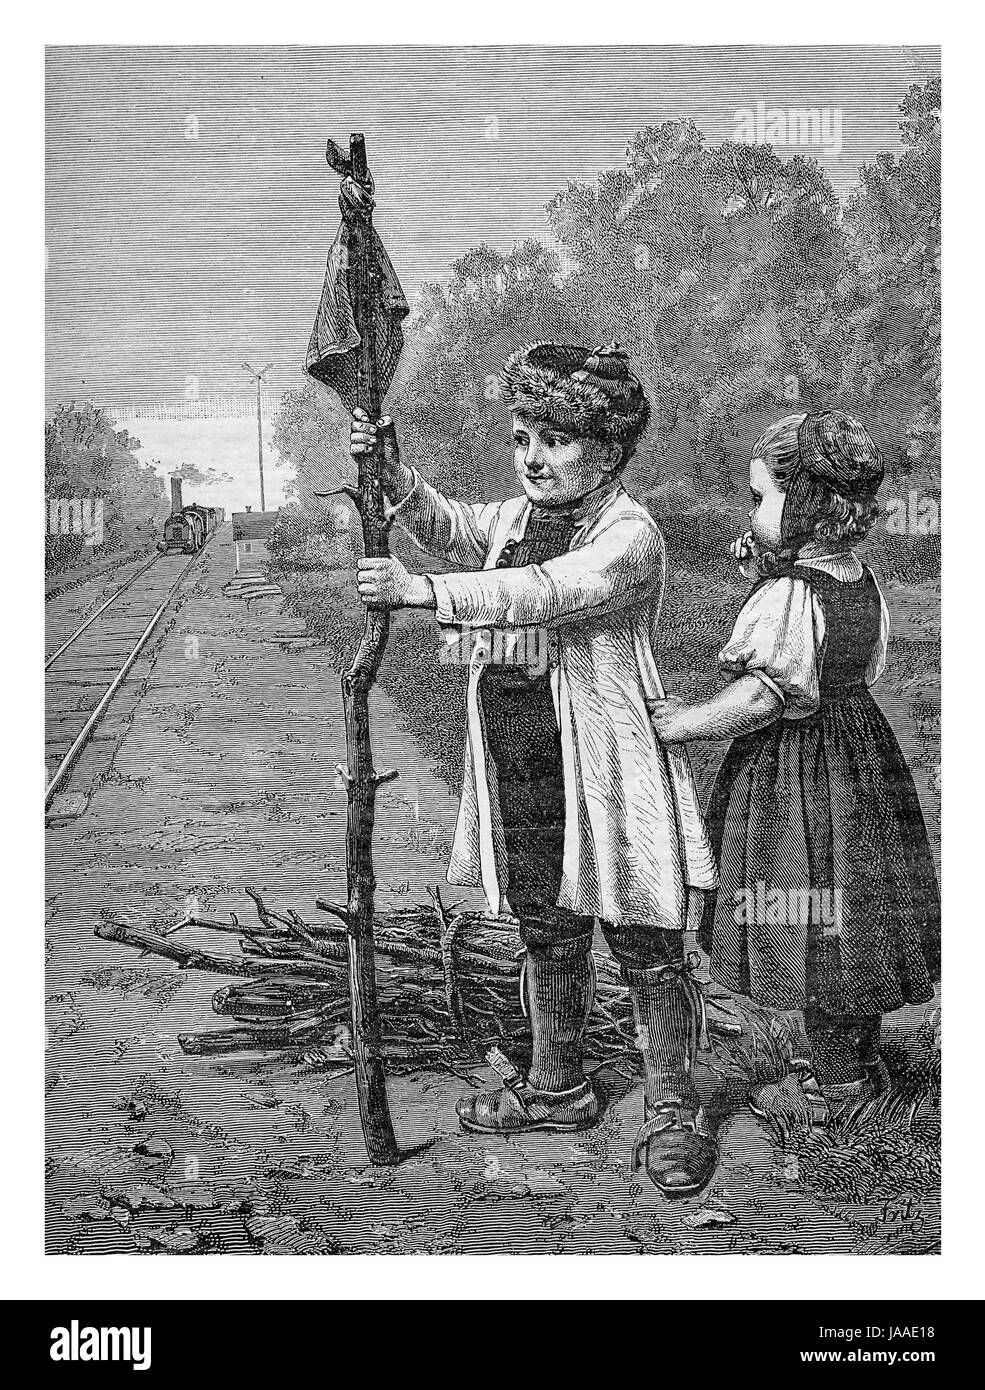 Voluntary rail caretakers, kids playing near the train rails, engraving from XIX century Stock Photo